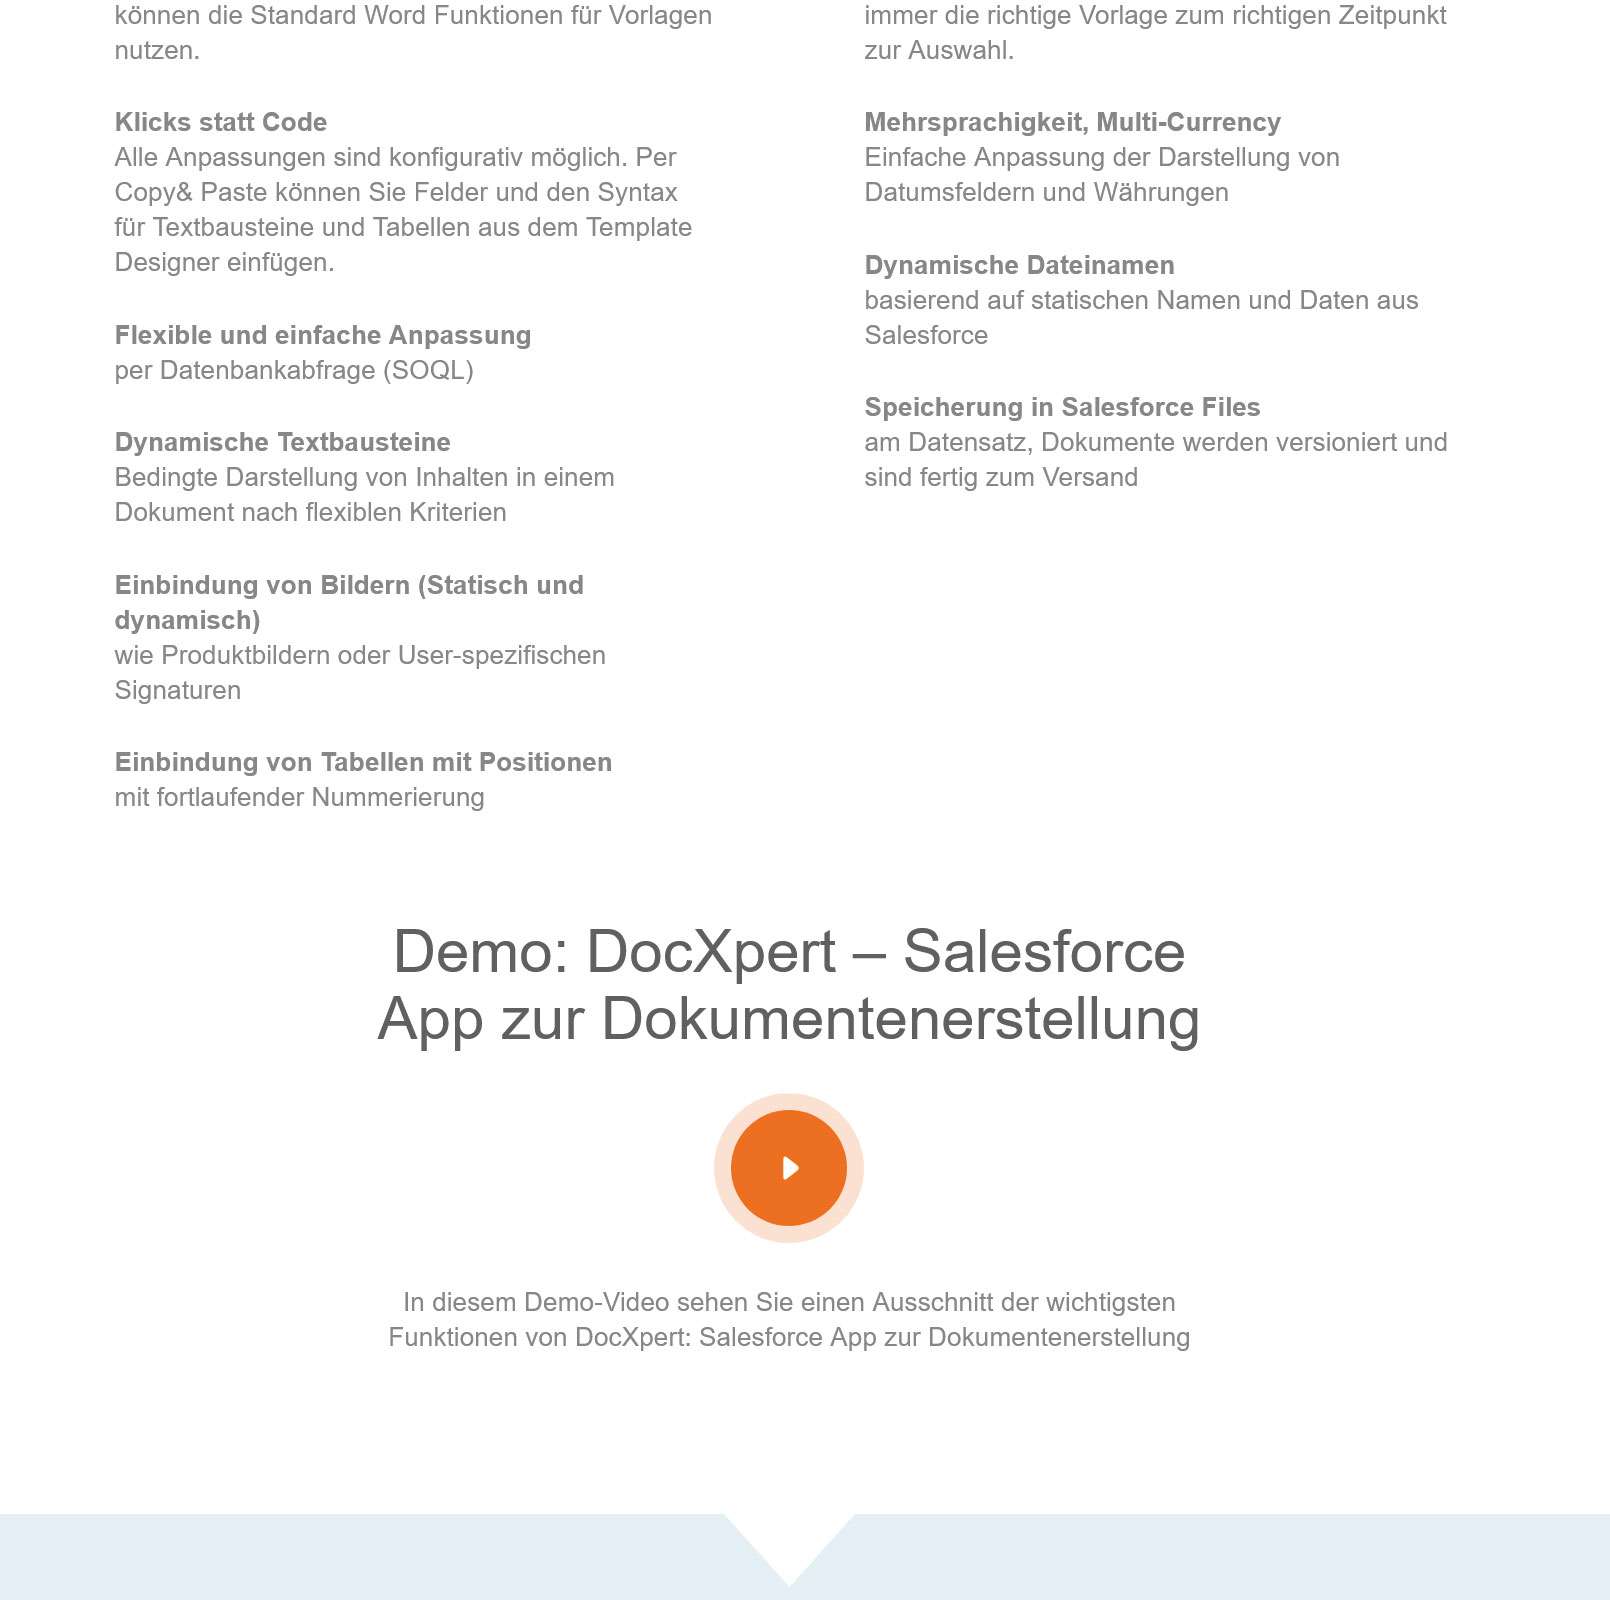 Salesforce App zur Dokumentenerstellung - DocXpert